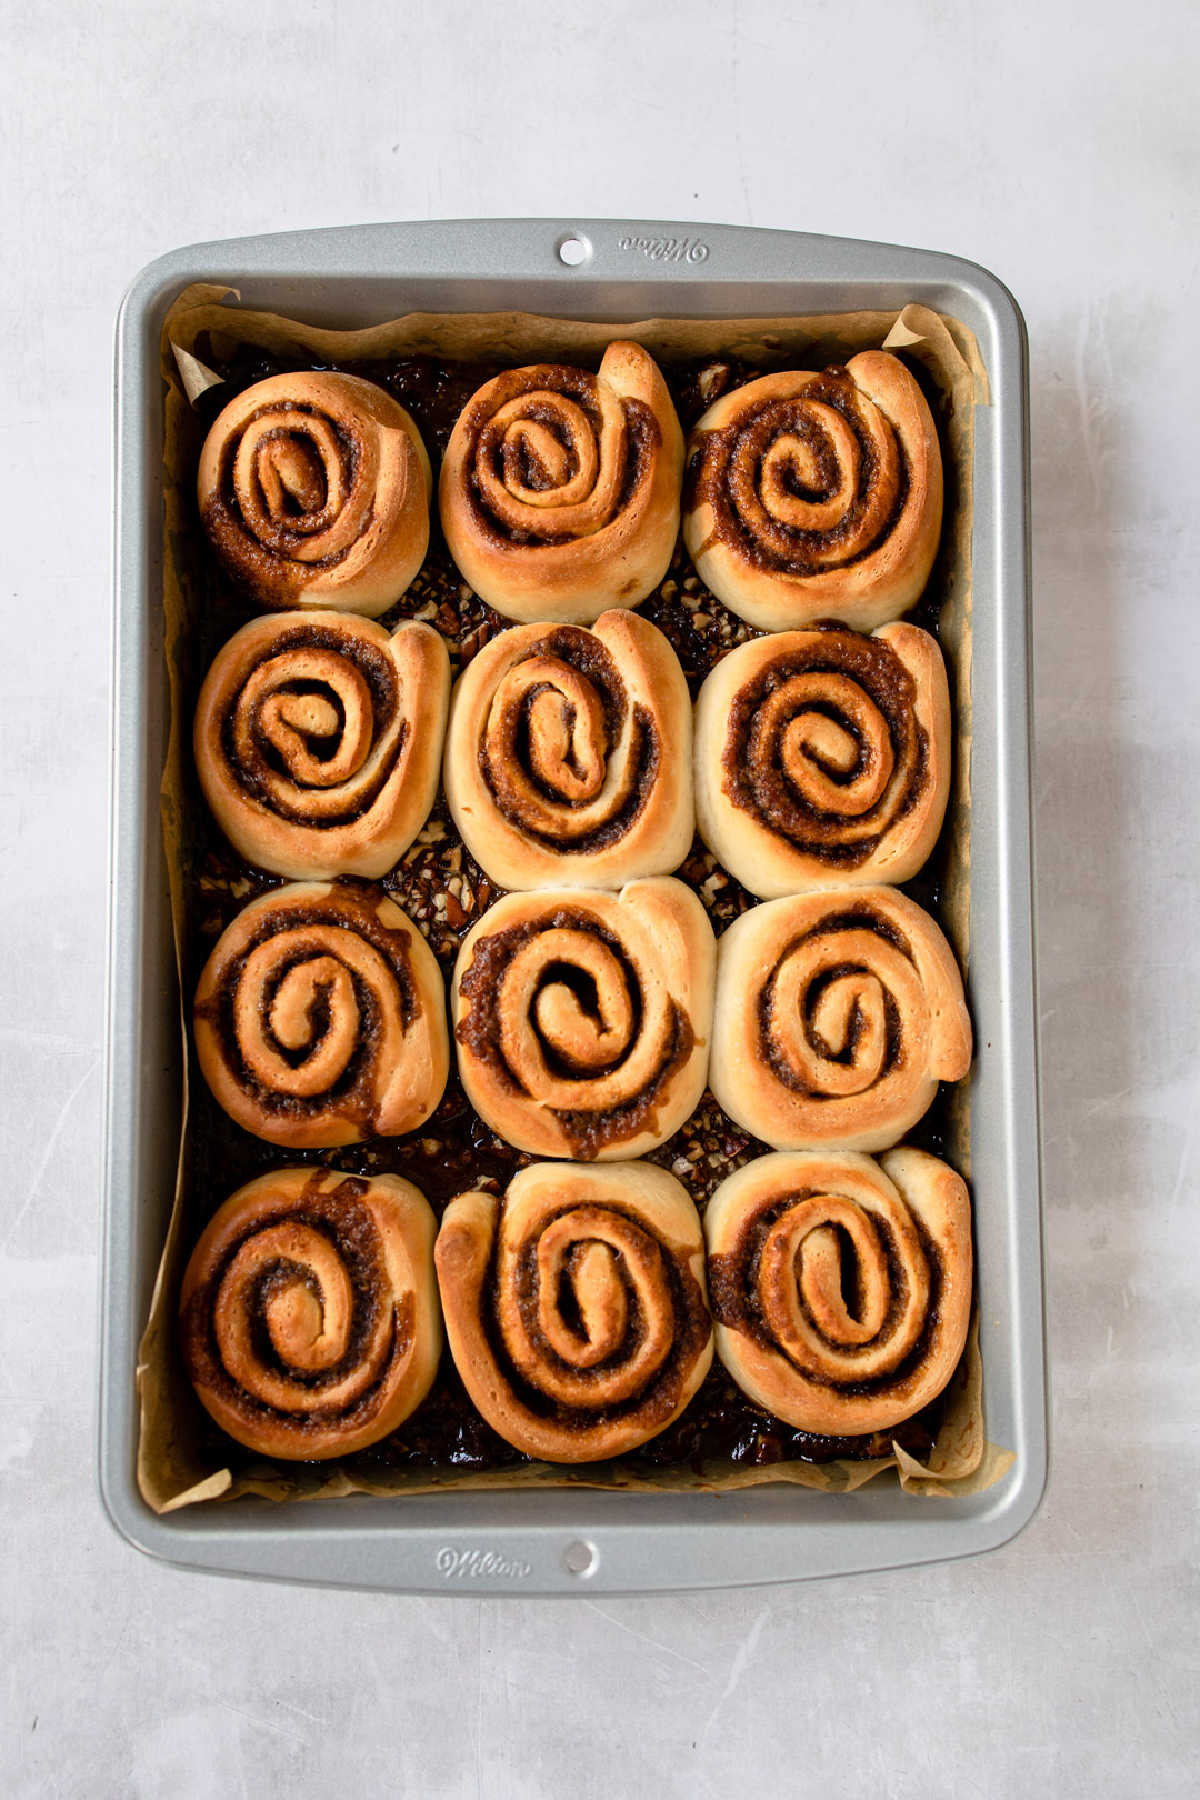 Baked caramel rolls in a baking pan.